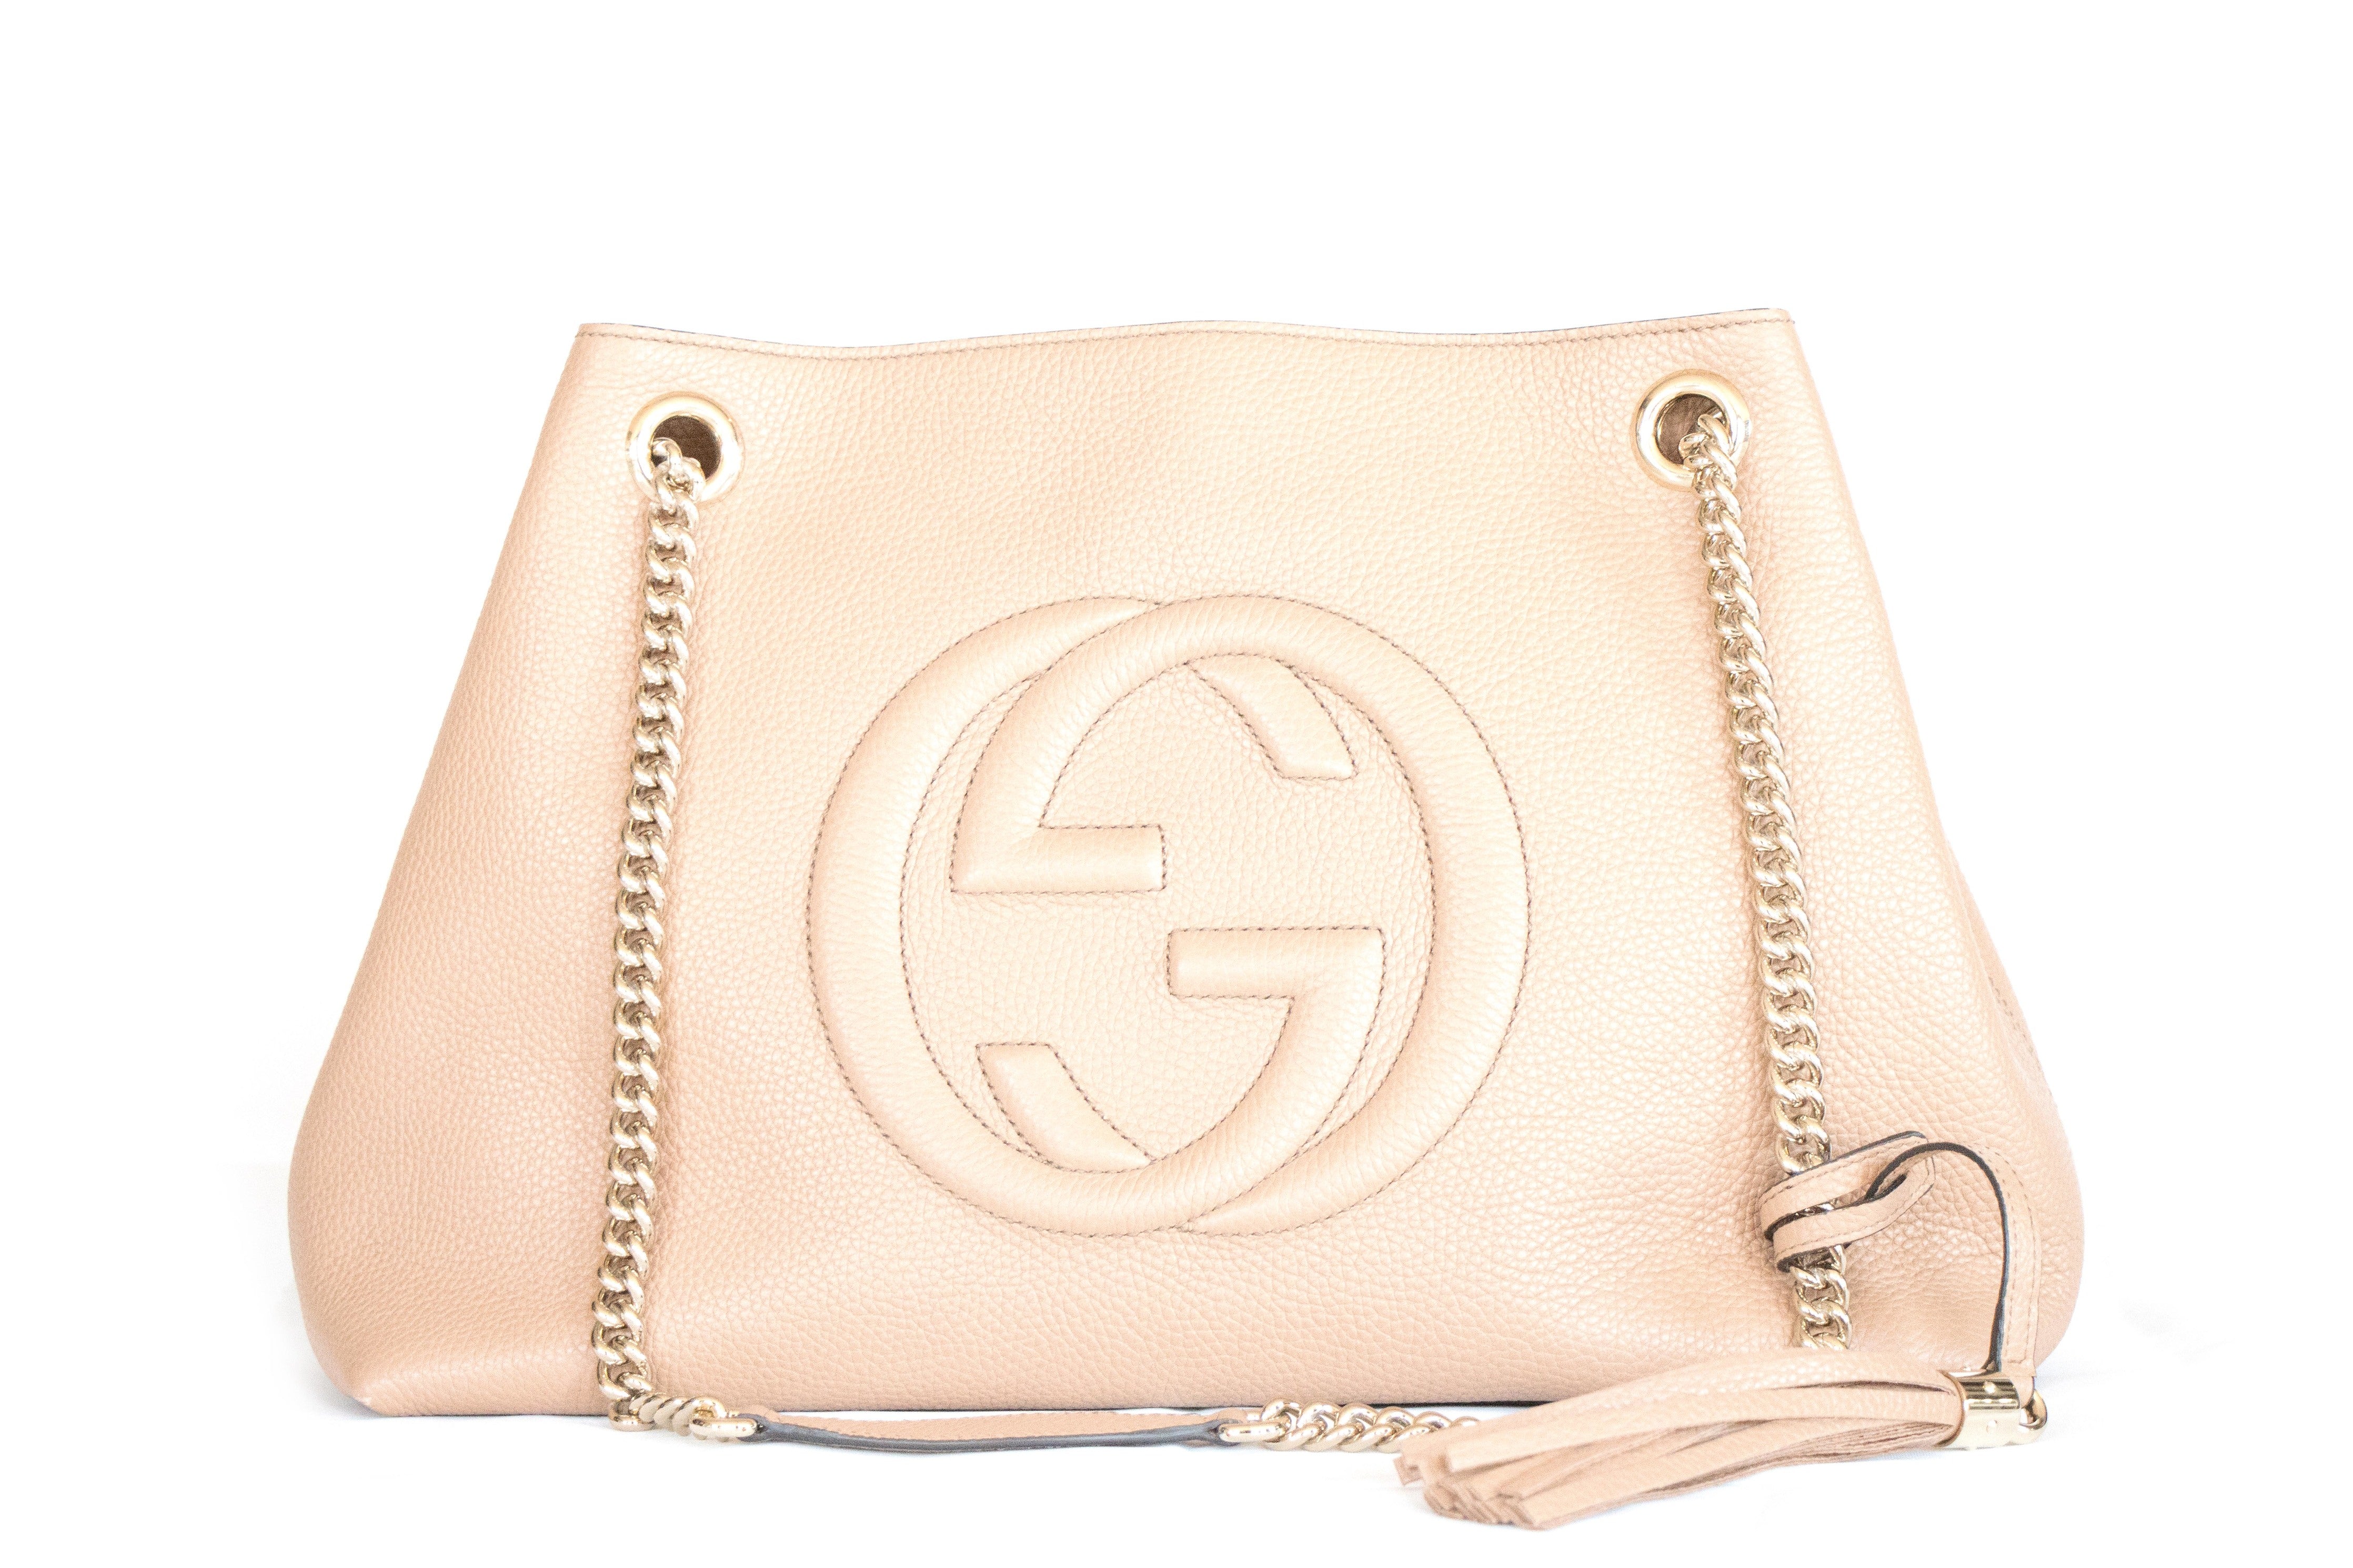 Gucci Women's Medium Soho Chain Tote Bag